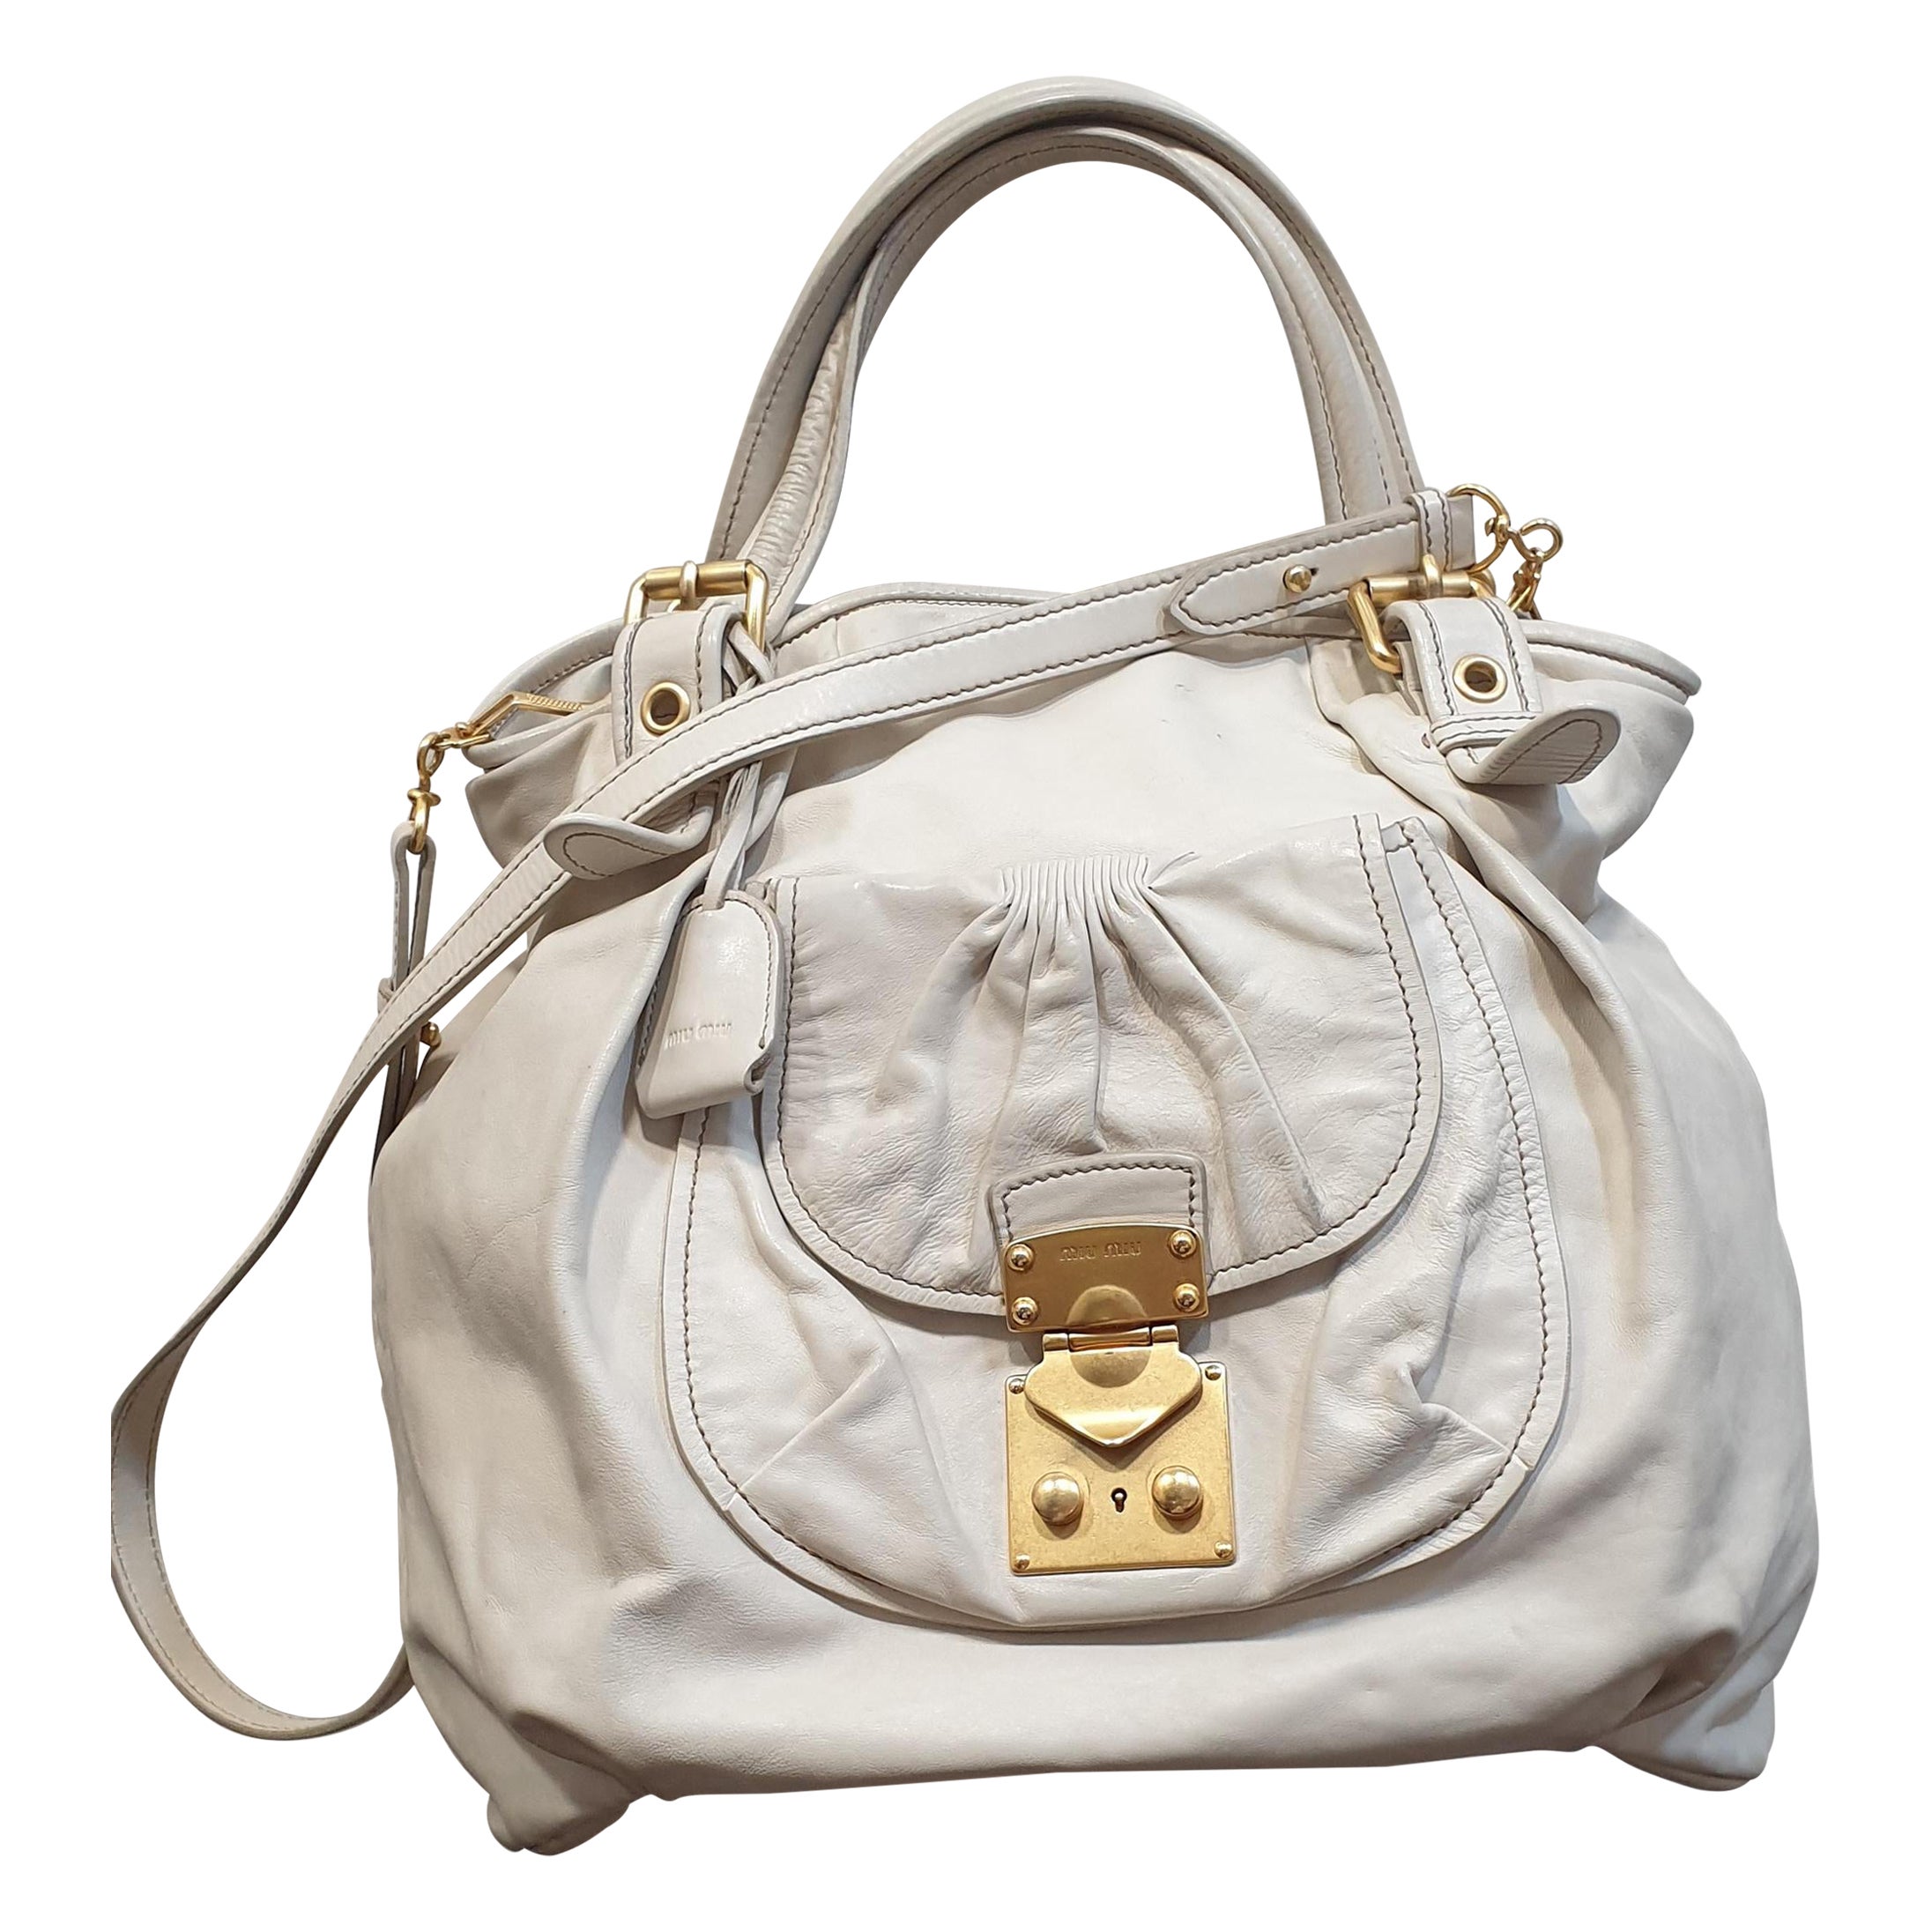 Handbags and Purses at Auction